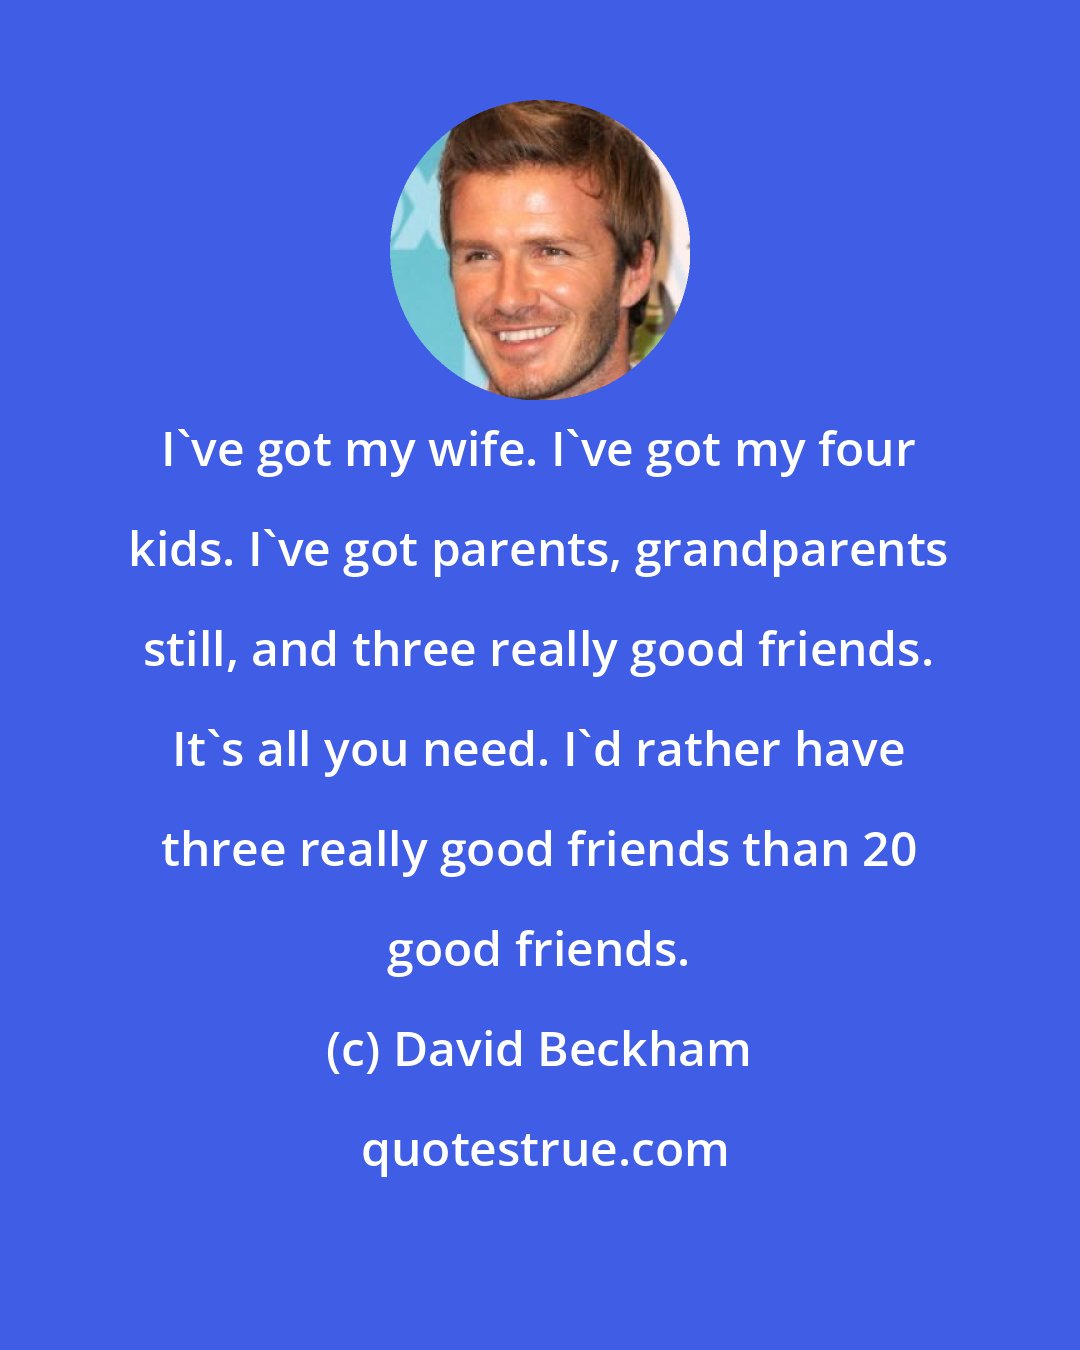 David Beckham: I've got my wife. I've got my four kids. I've got parents, grandparents still, and three really good friends. It's all you need. I'd rather have three really good friends than 20 good friends.